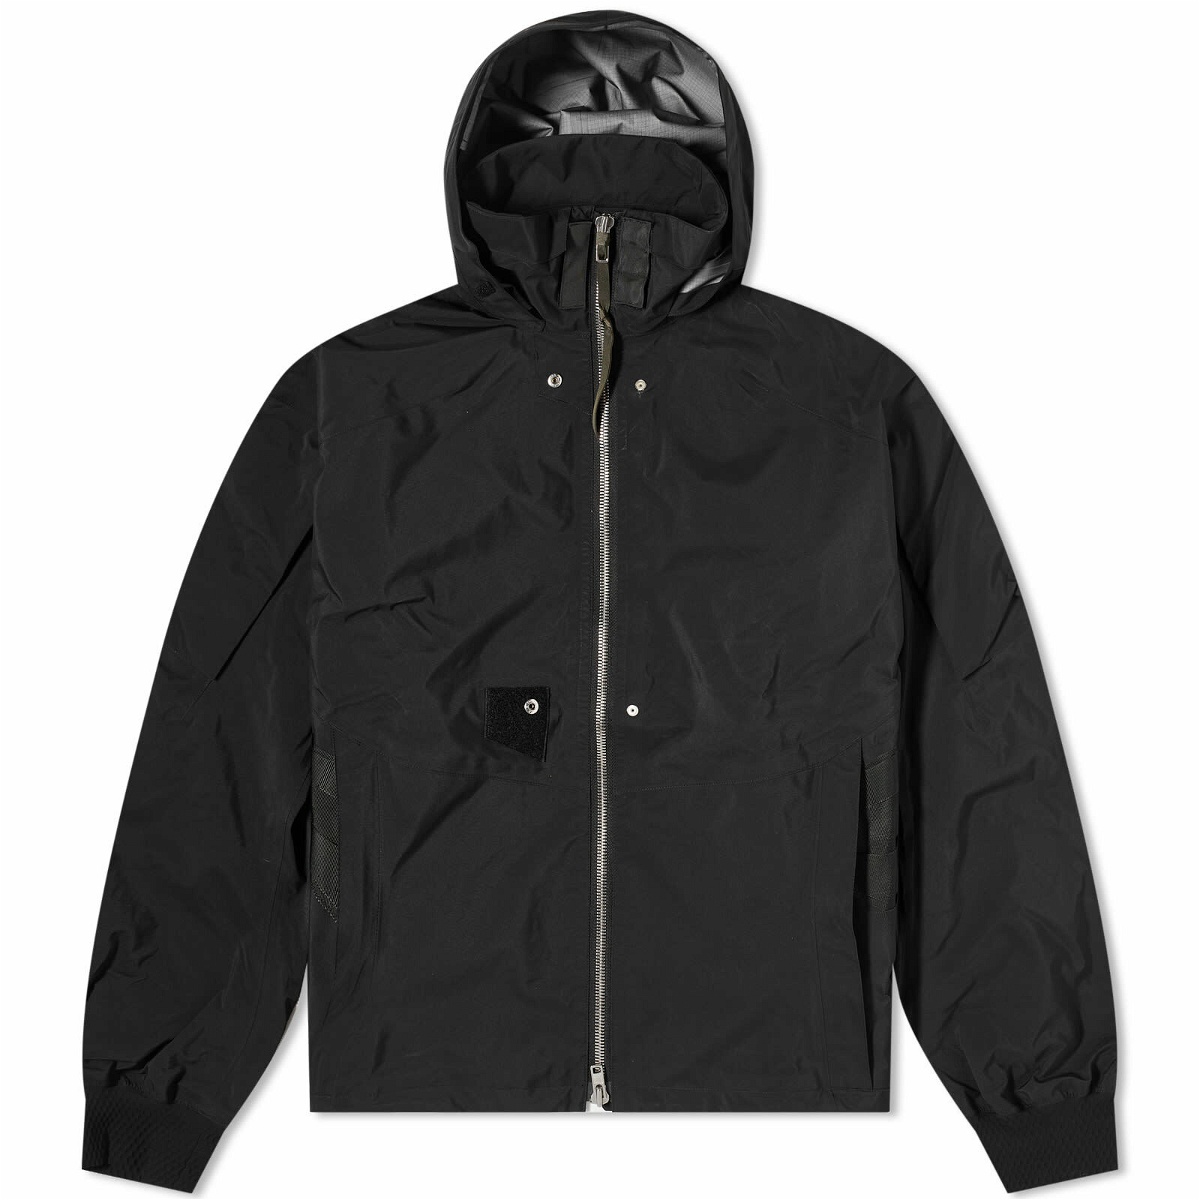 Photo: Acronym Men's 3L Gore-Tex Pro Tec Hard Shell Jacket in Black